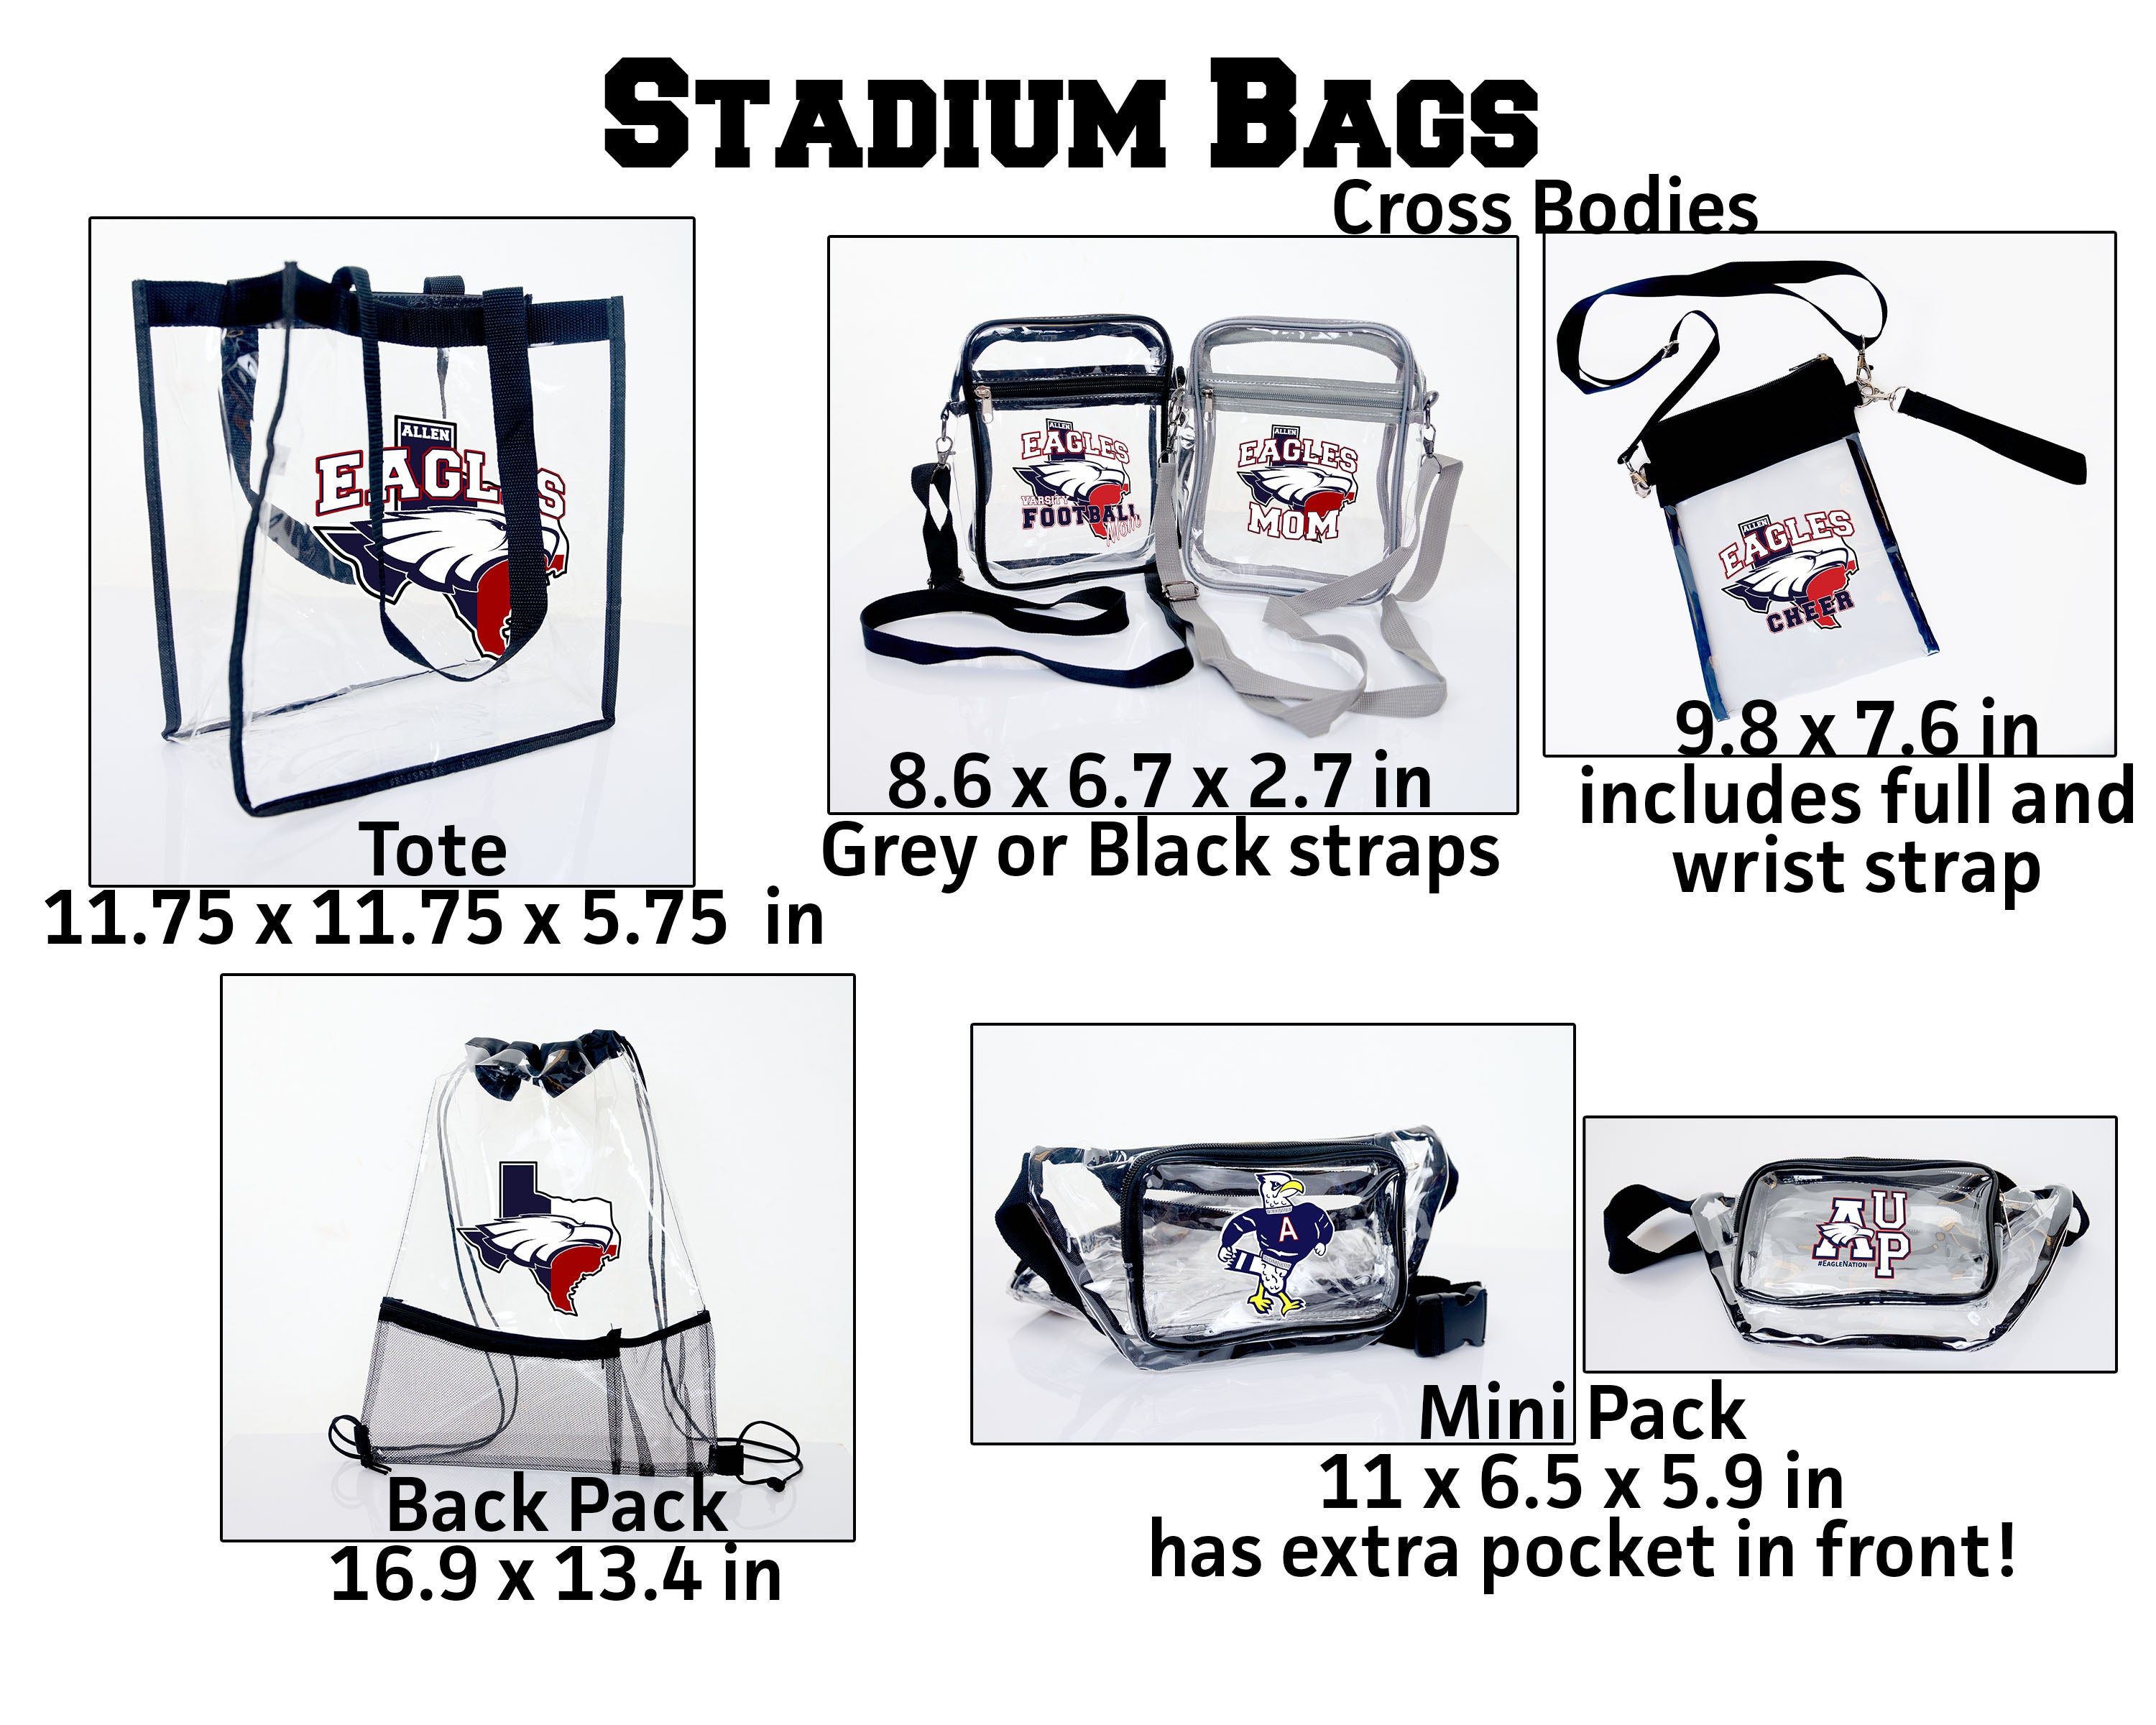 The Gridiron Strap Clear Stadium Bag